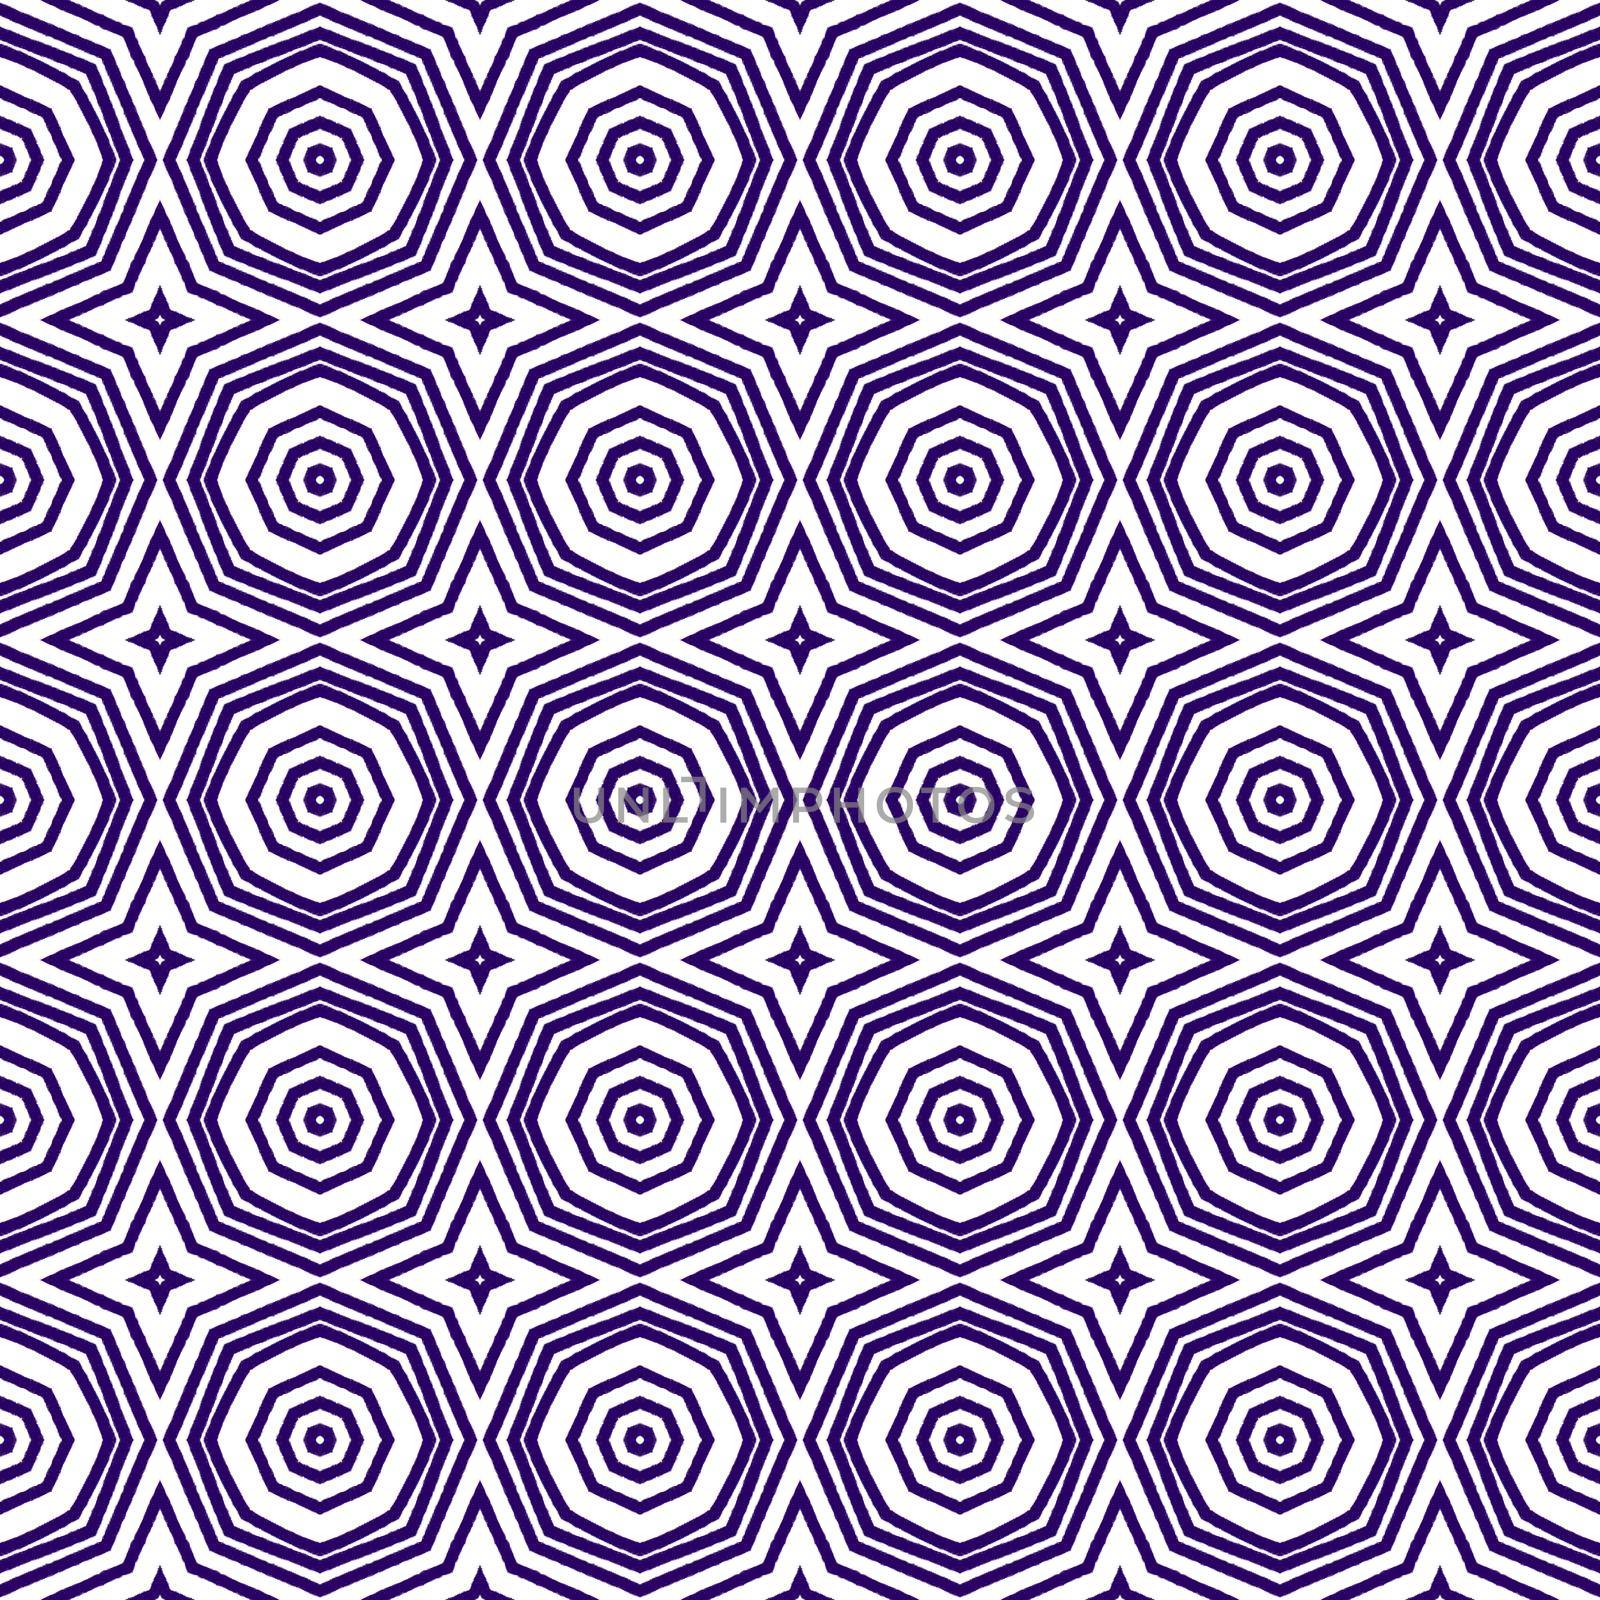 Chevron stripes design. Purple symmetrical kaleidoscope background. Geometric chevron stripes pattern. Textile ready quaint print, swimwear fabric, wallpaper, wrapping.